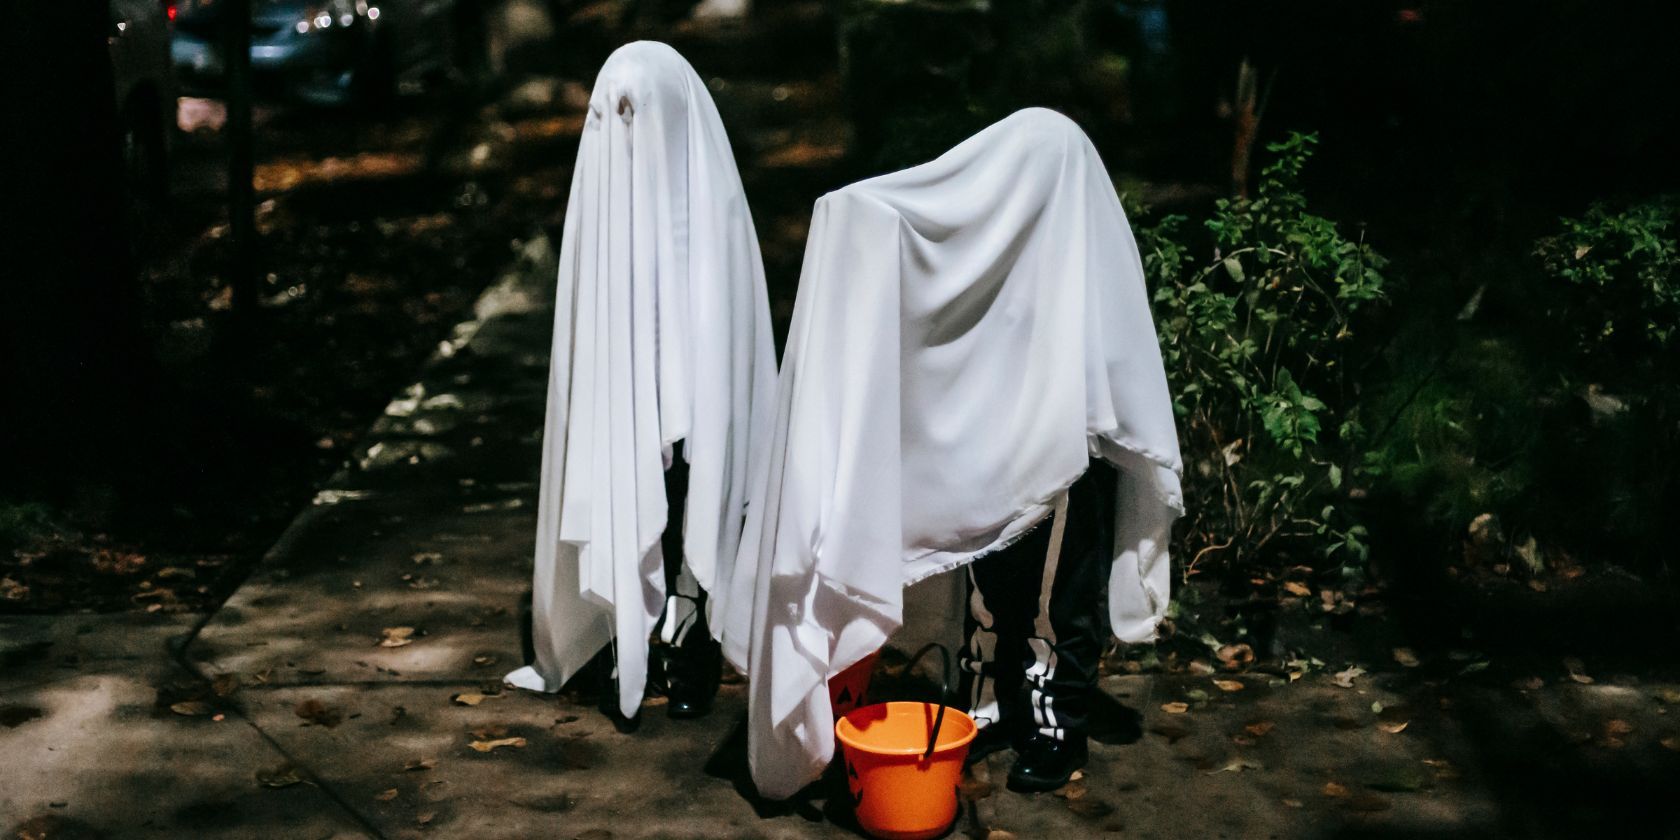 Faceless kids in phantom costumes on Halloween night in town